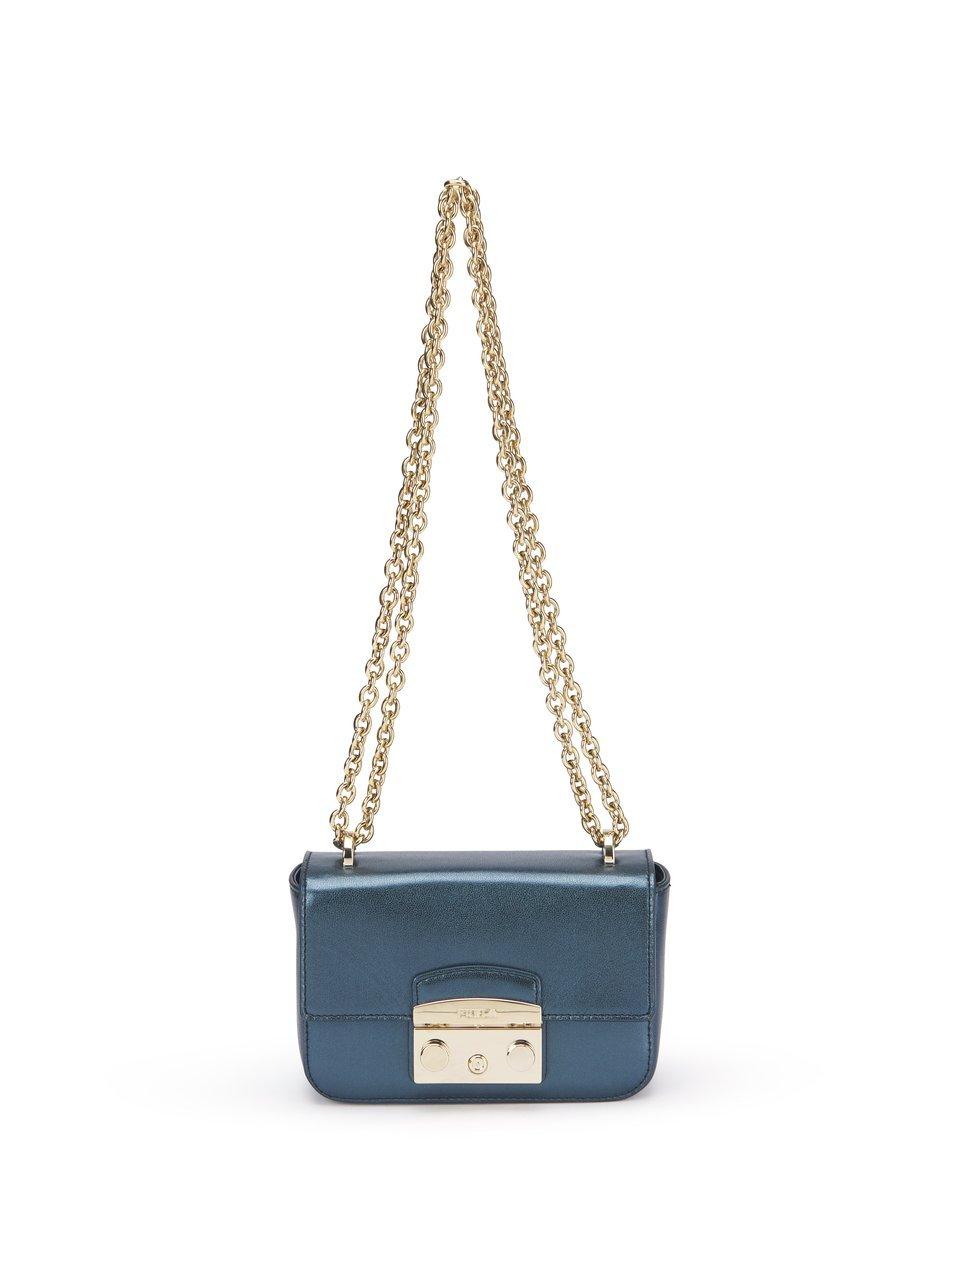 Image of Shoulder bag “Metropolis mini“ Furla blue